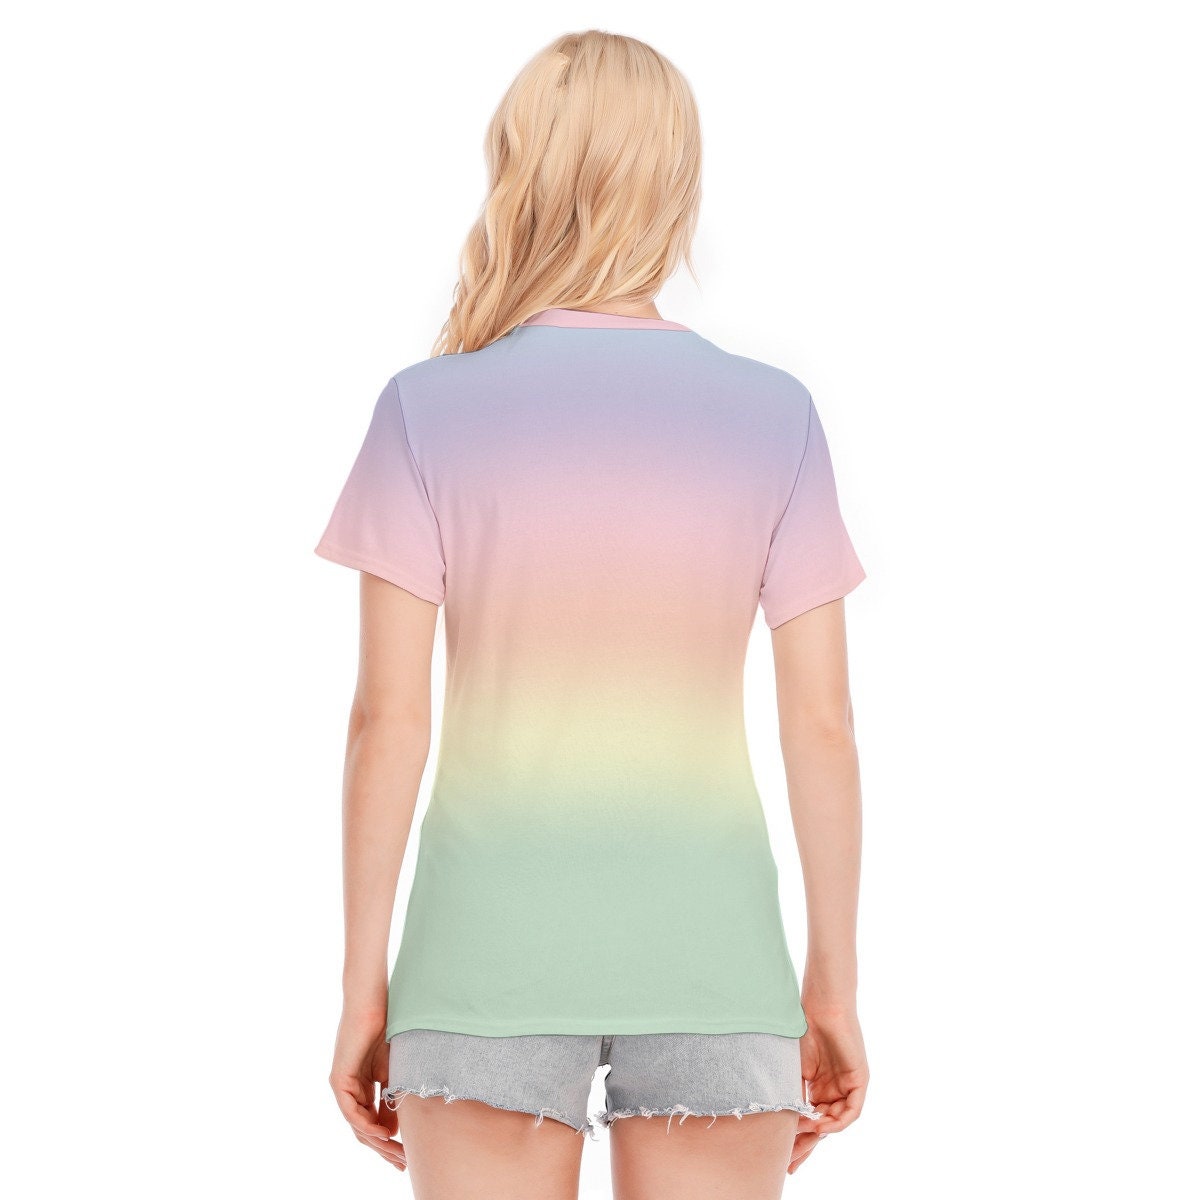 Ombre-Top, Regenbogen-Tops, Ombre-T-Shirt, Regenbogen-T-Shirt, Damen-T-Shirts, einzigartiges T-Shirt, Ombre-T-Shirt, abstraktes T-Shirt, künstlerisches T-Shirt